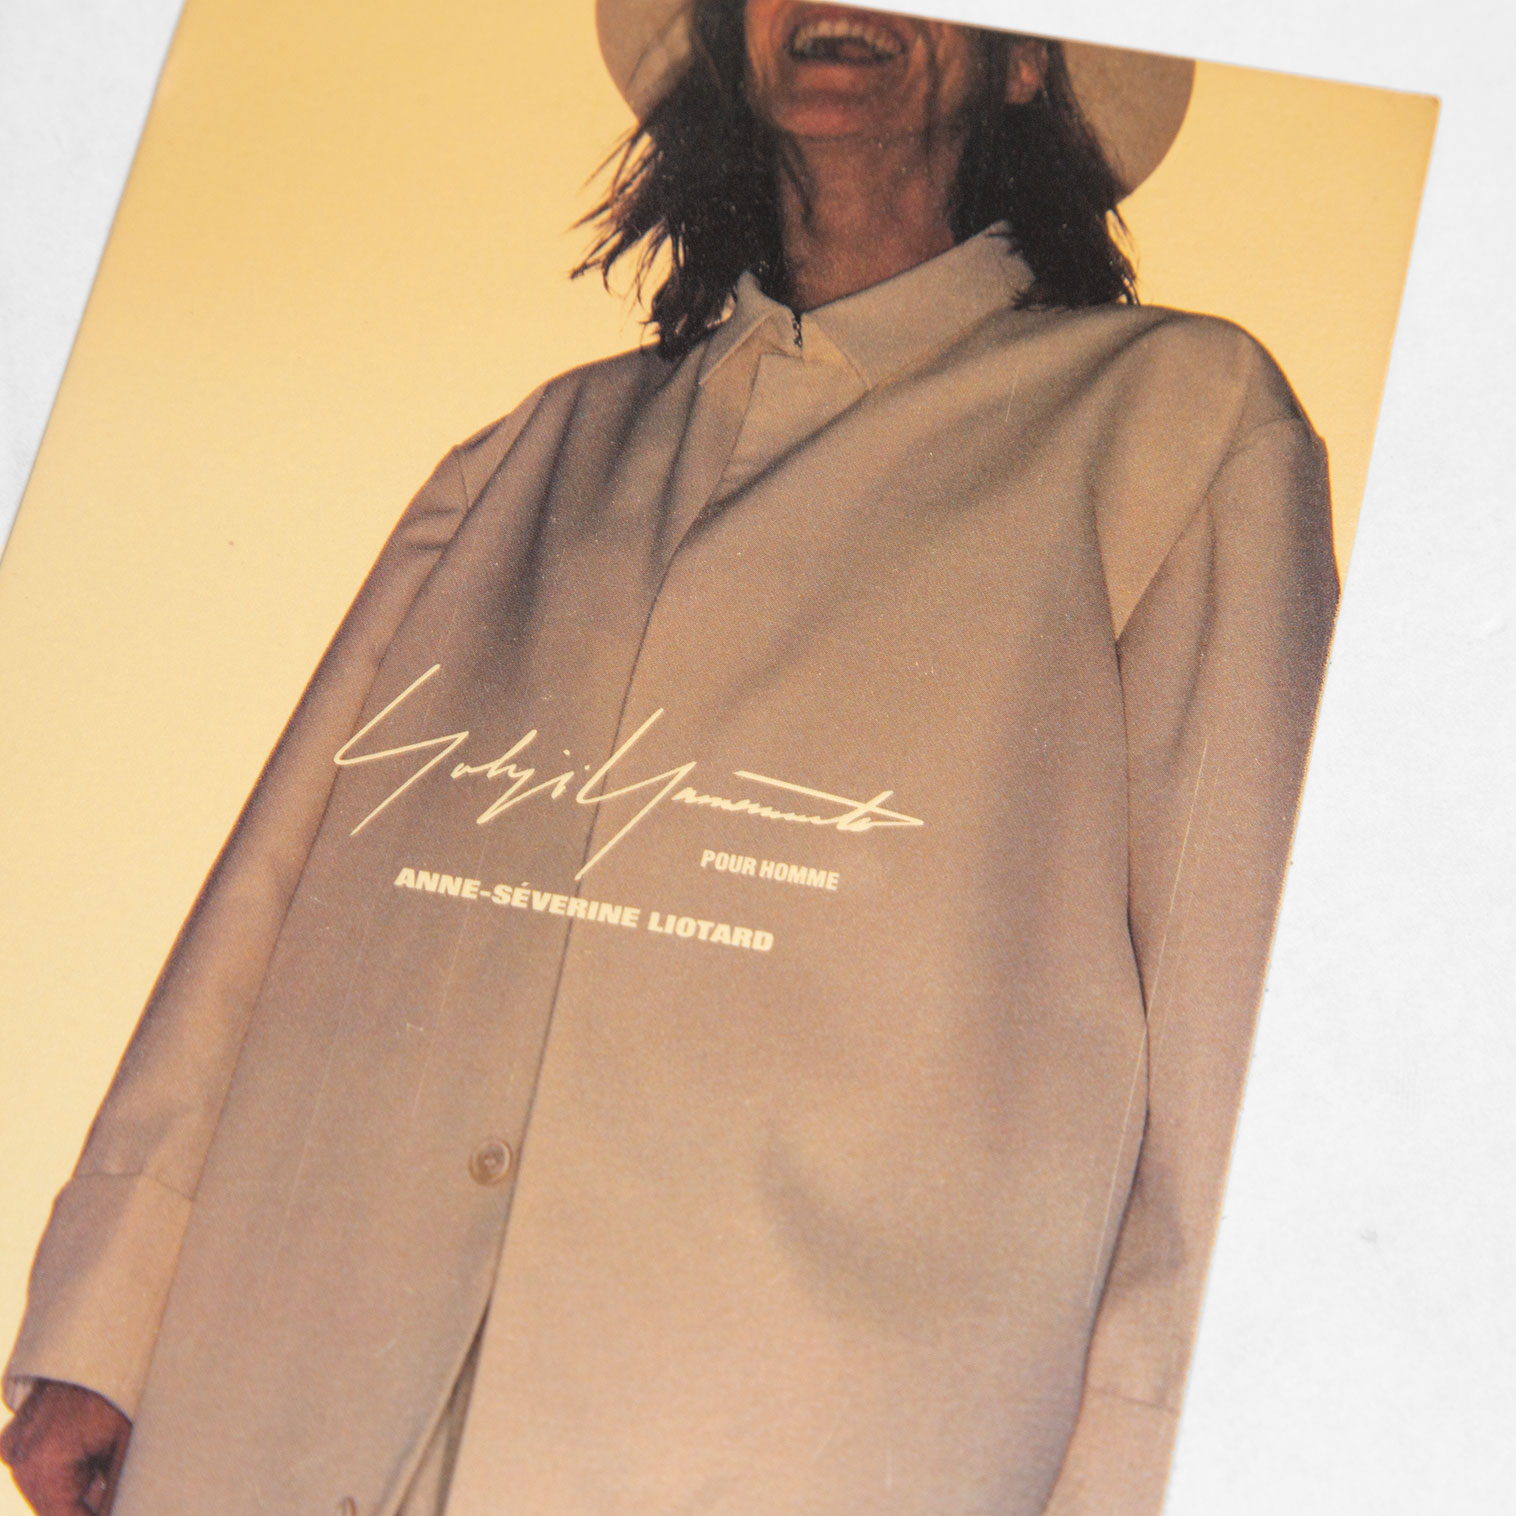 Yohji Yamamoto POUR HOMME AUTUMN & WINTER 1998 1999 Invitation Card